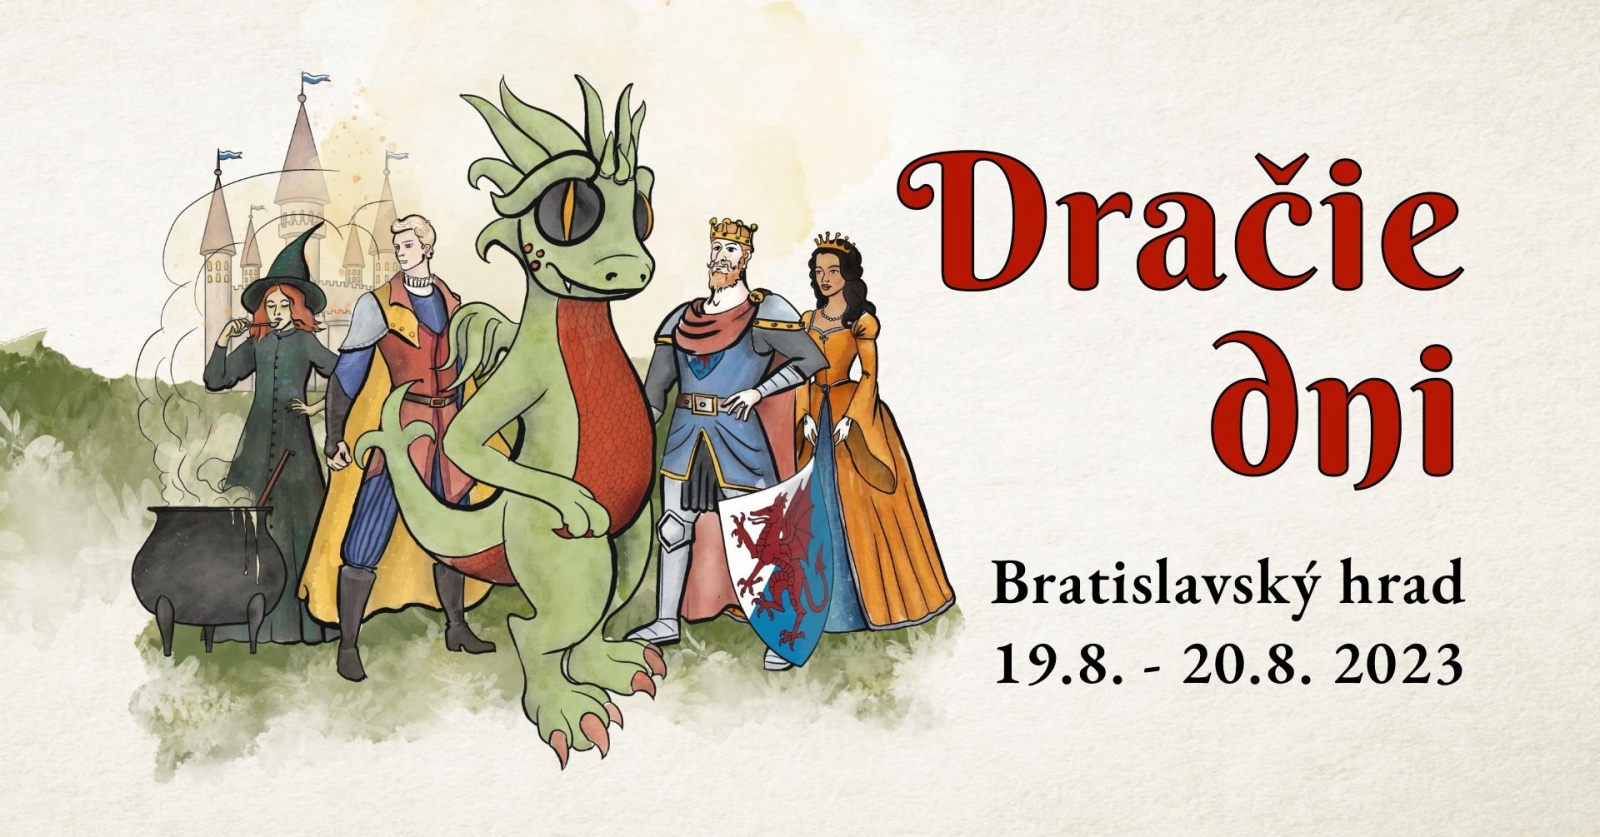 Dračie dni – Bratislavský hrad